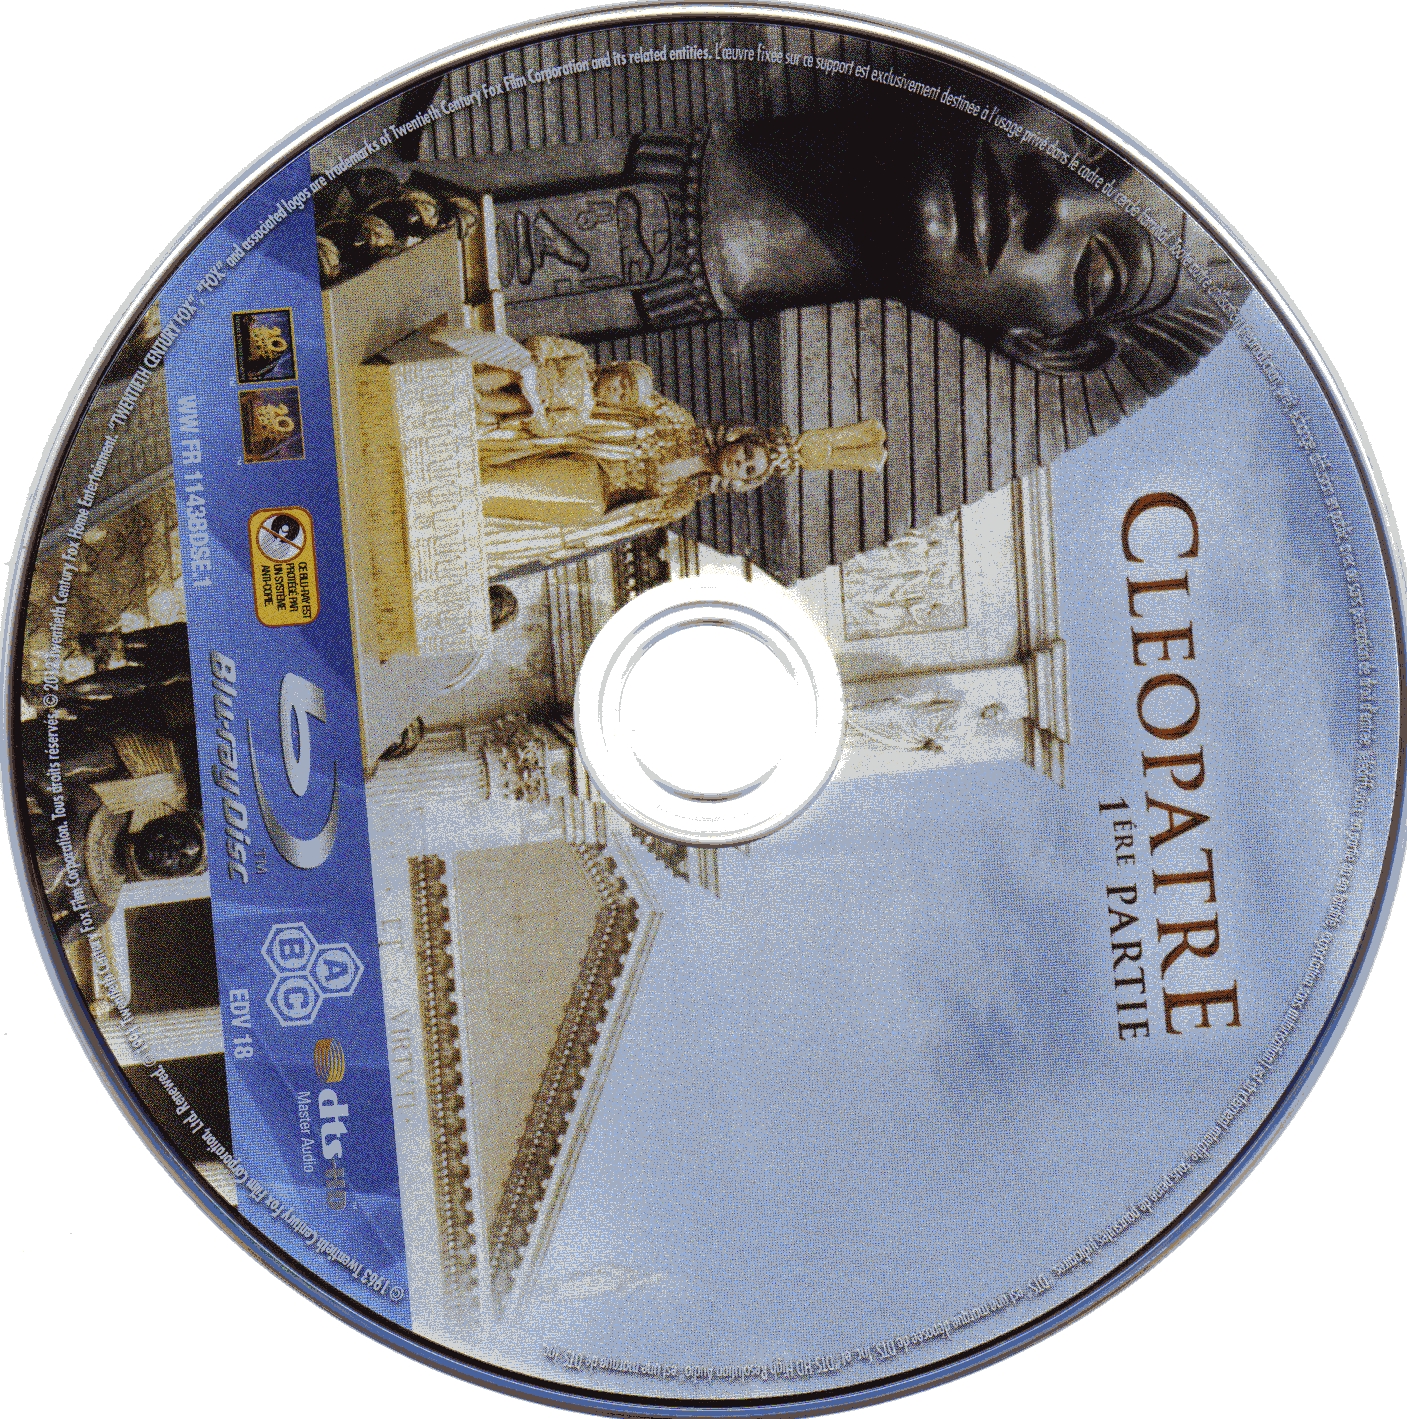 Cleopatre (1963) (BLU-RAY) DISC 1